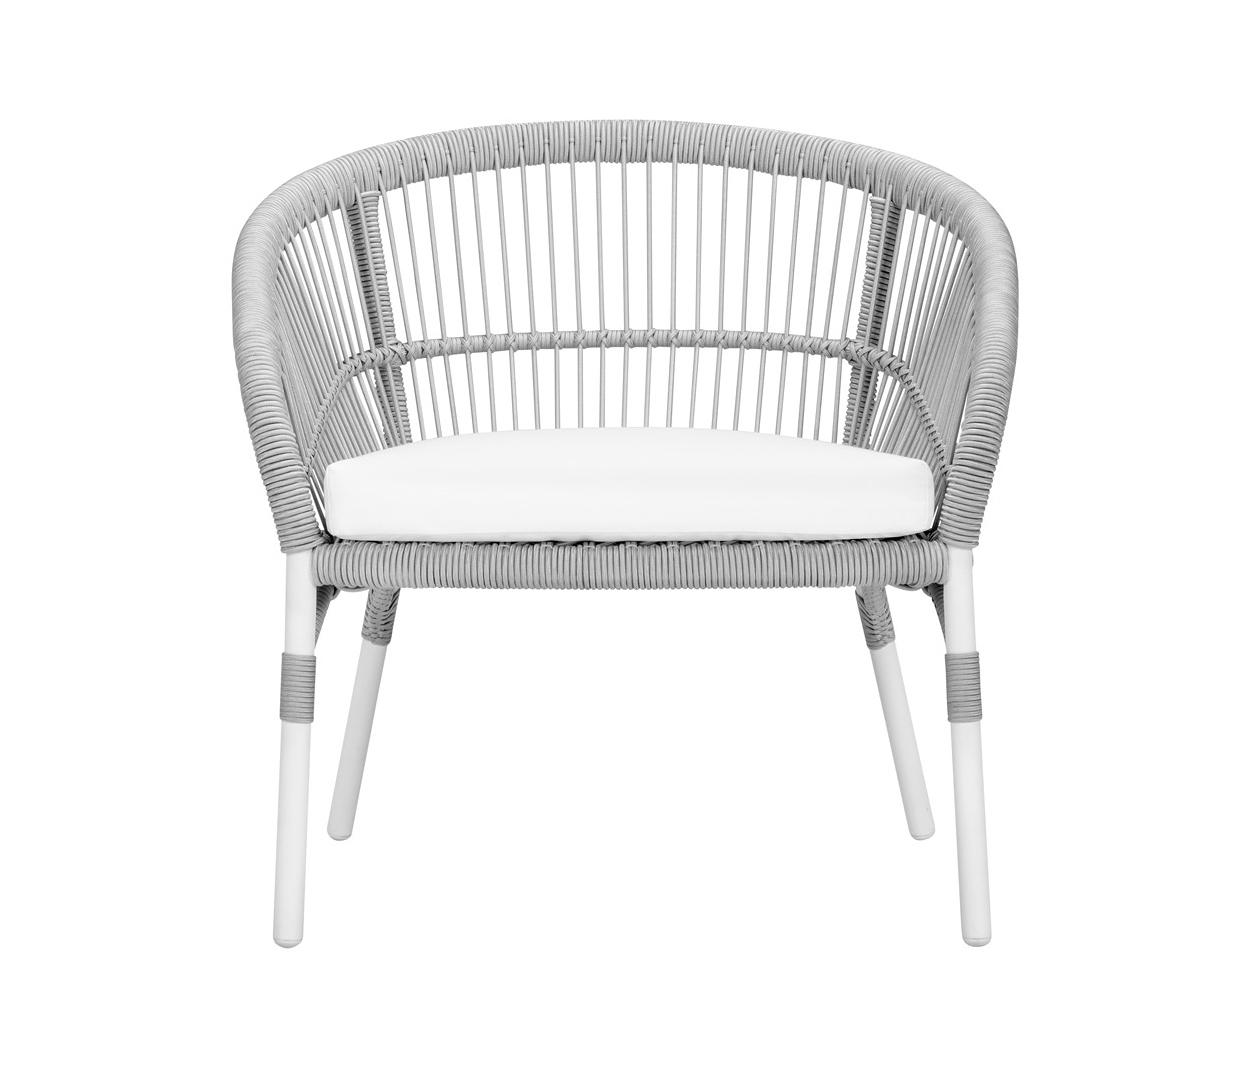 NEXUS LOUNGE CHAIR & designer furniture | Architonic